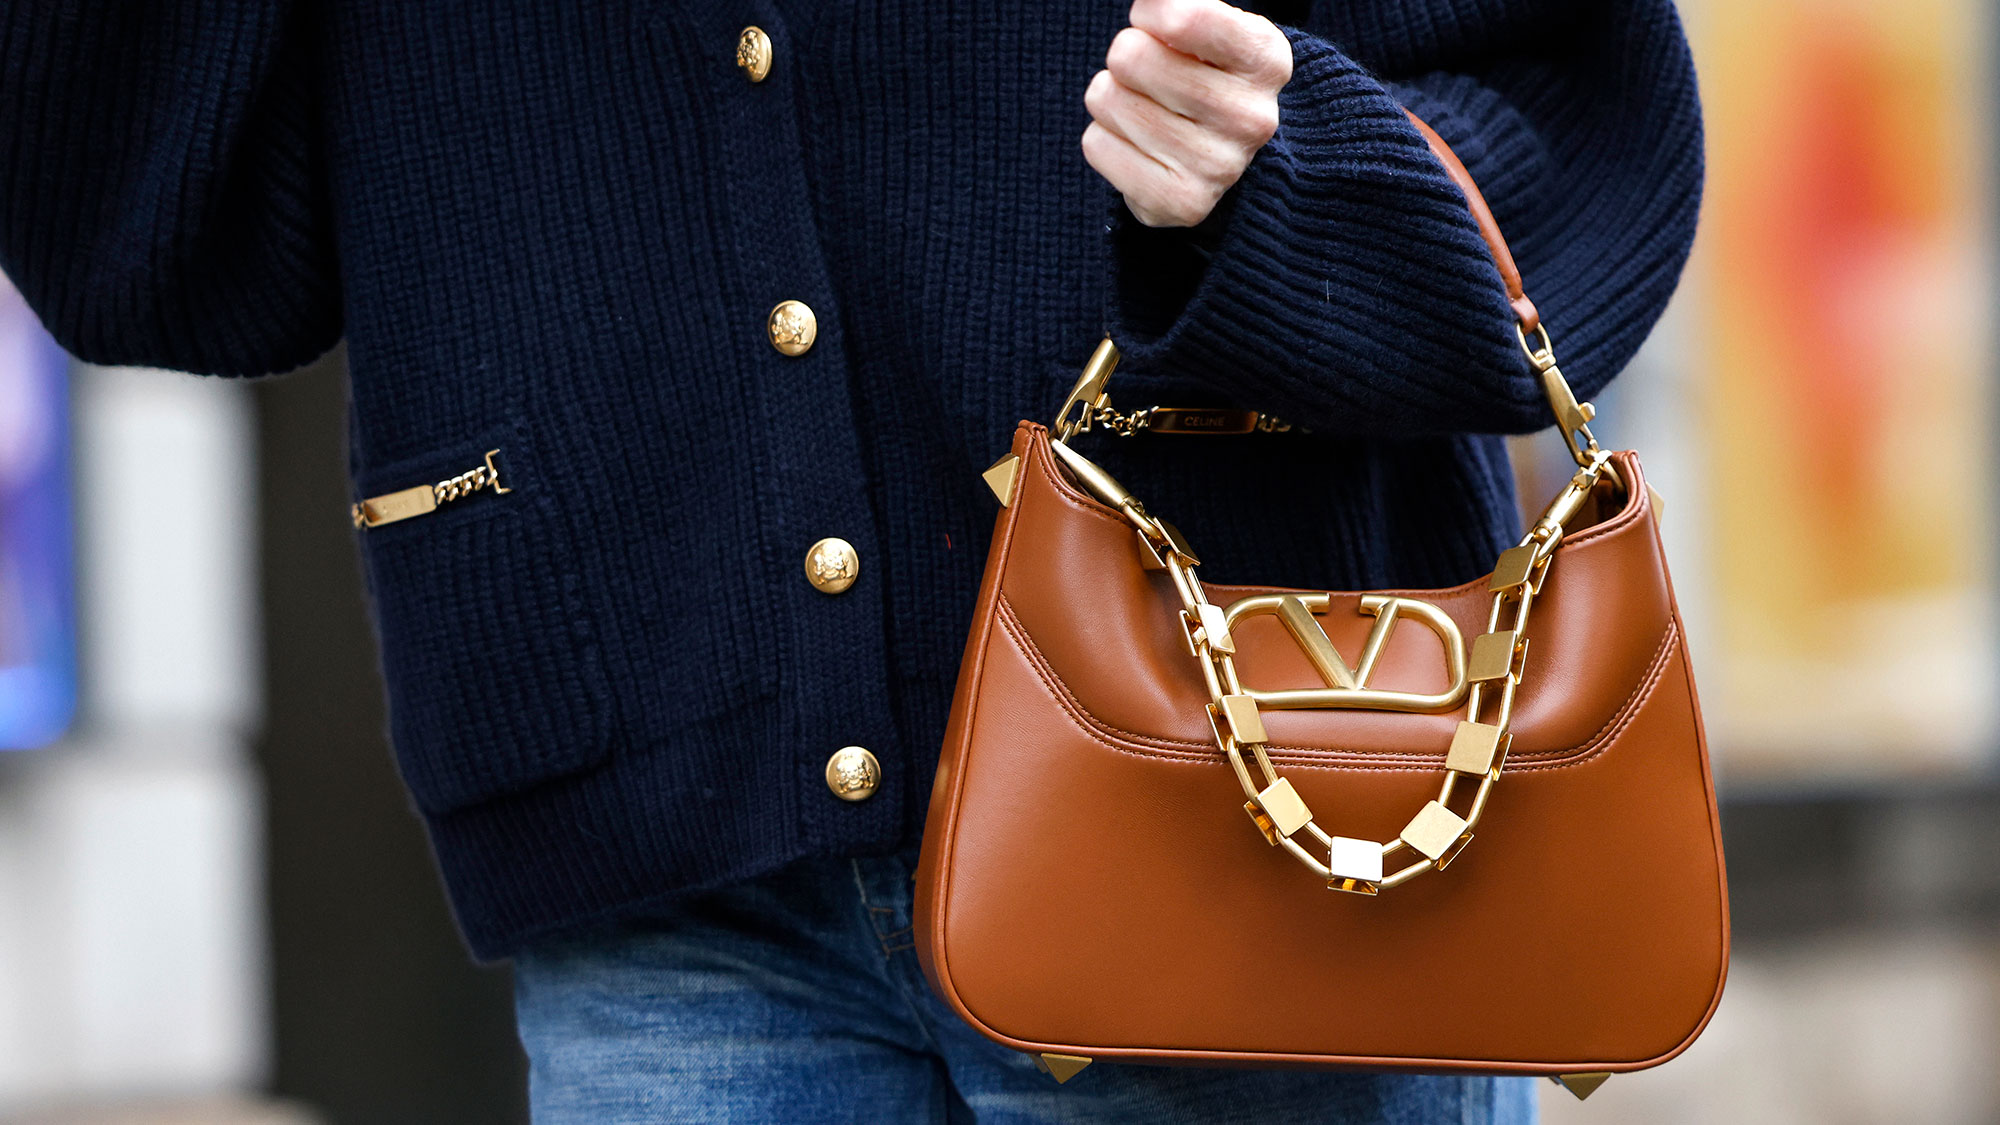 The best luxury handbags for 2022